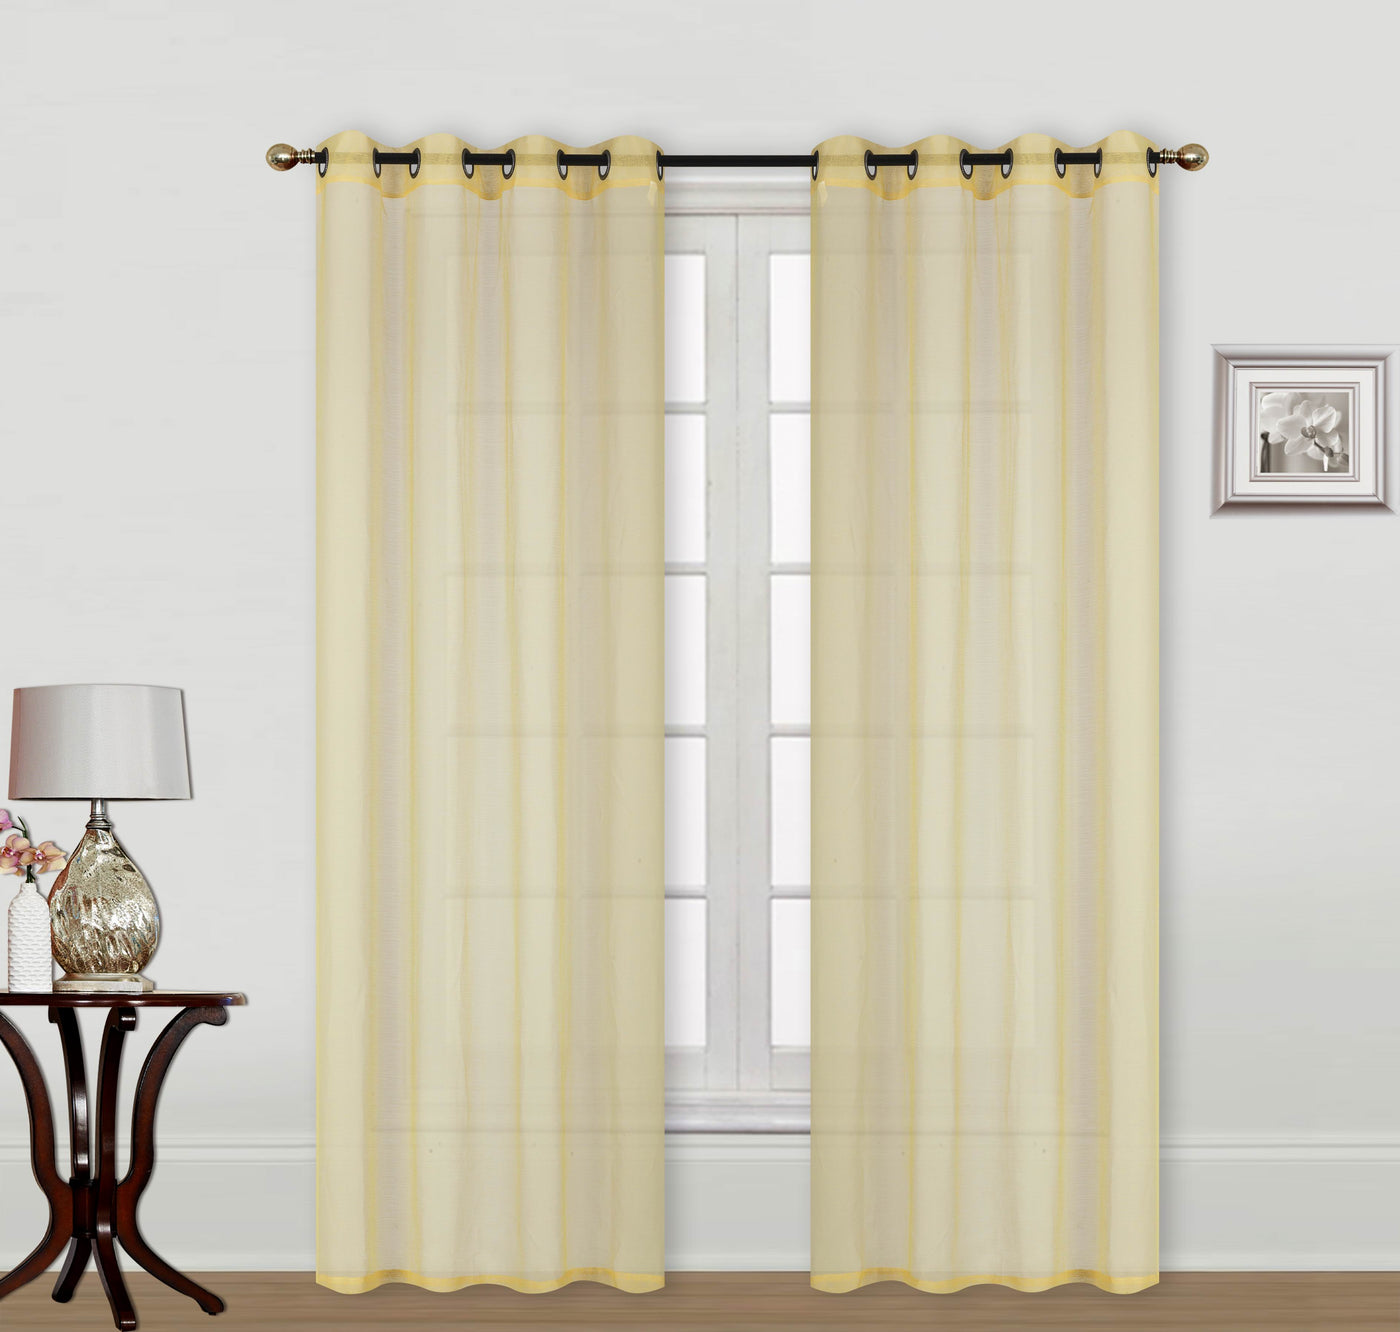 2 Piece Sheer Voile Window Curtain Grommet Panels Light Filtering | Jenin Home Furnishing.